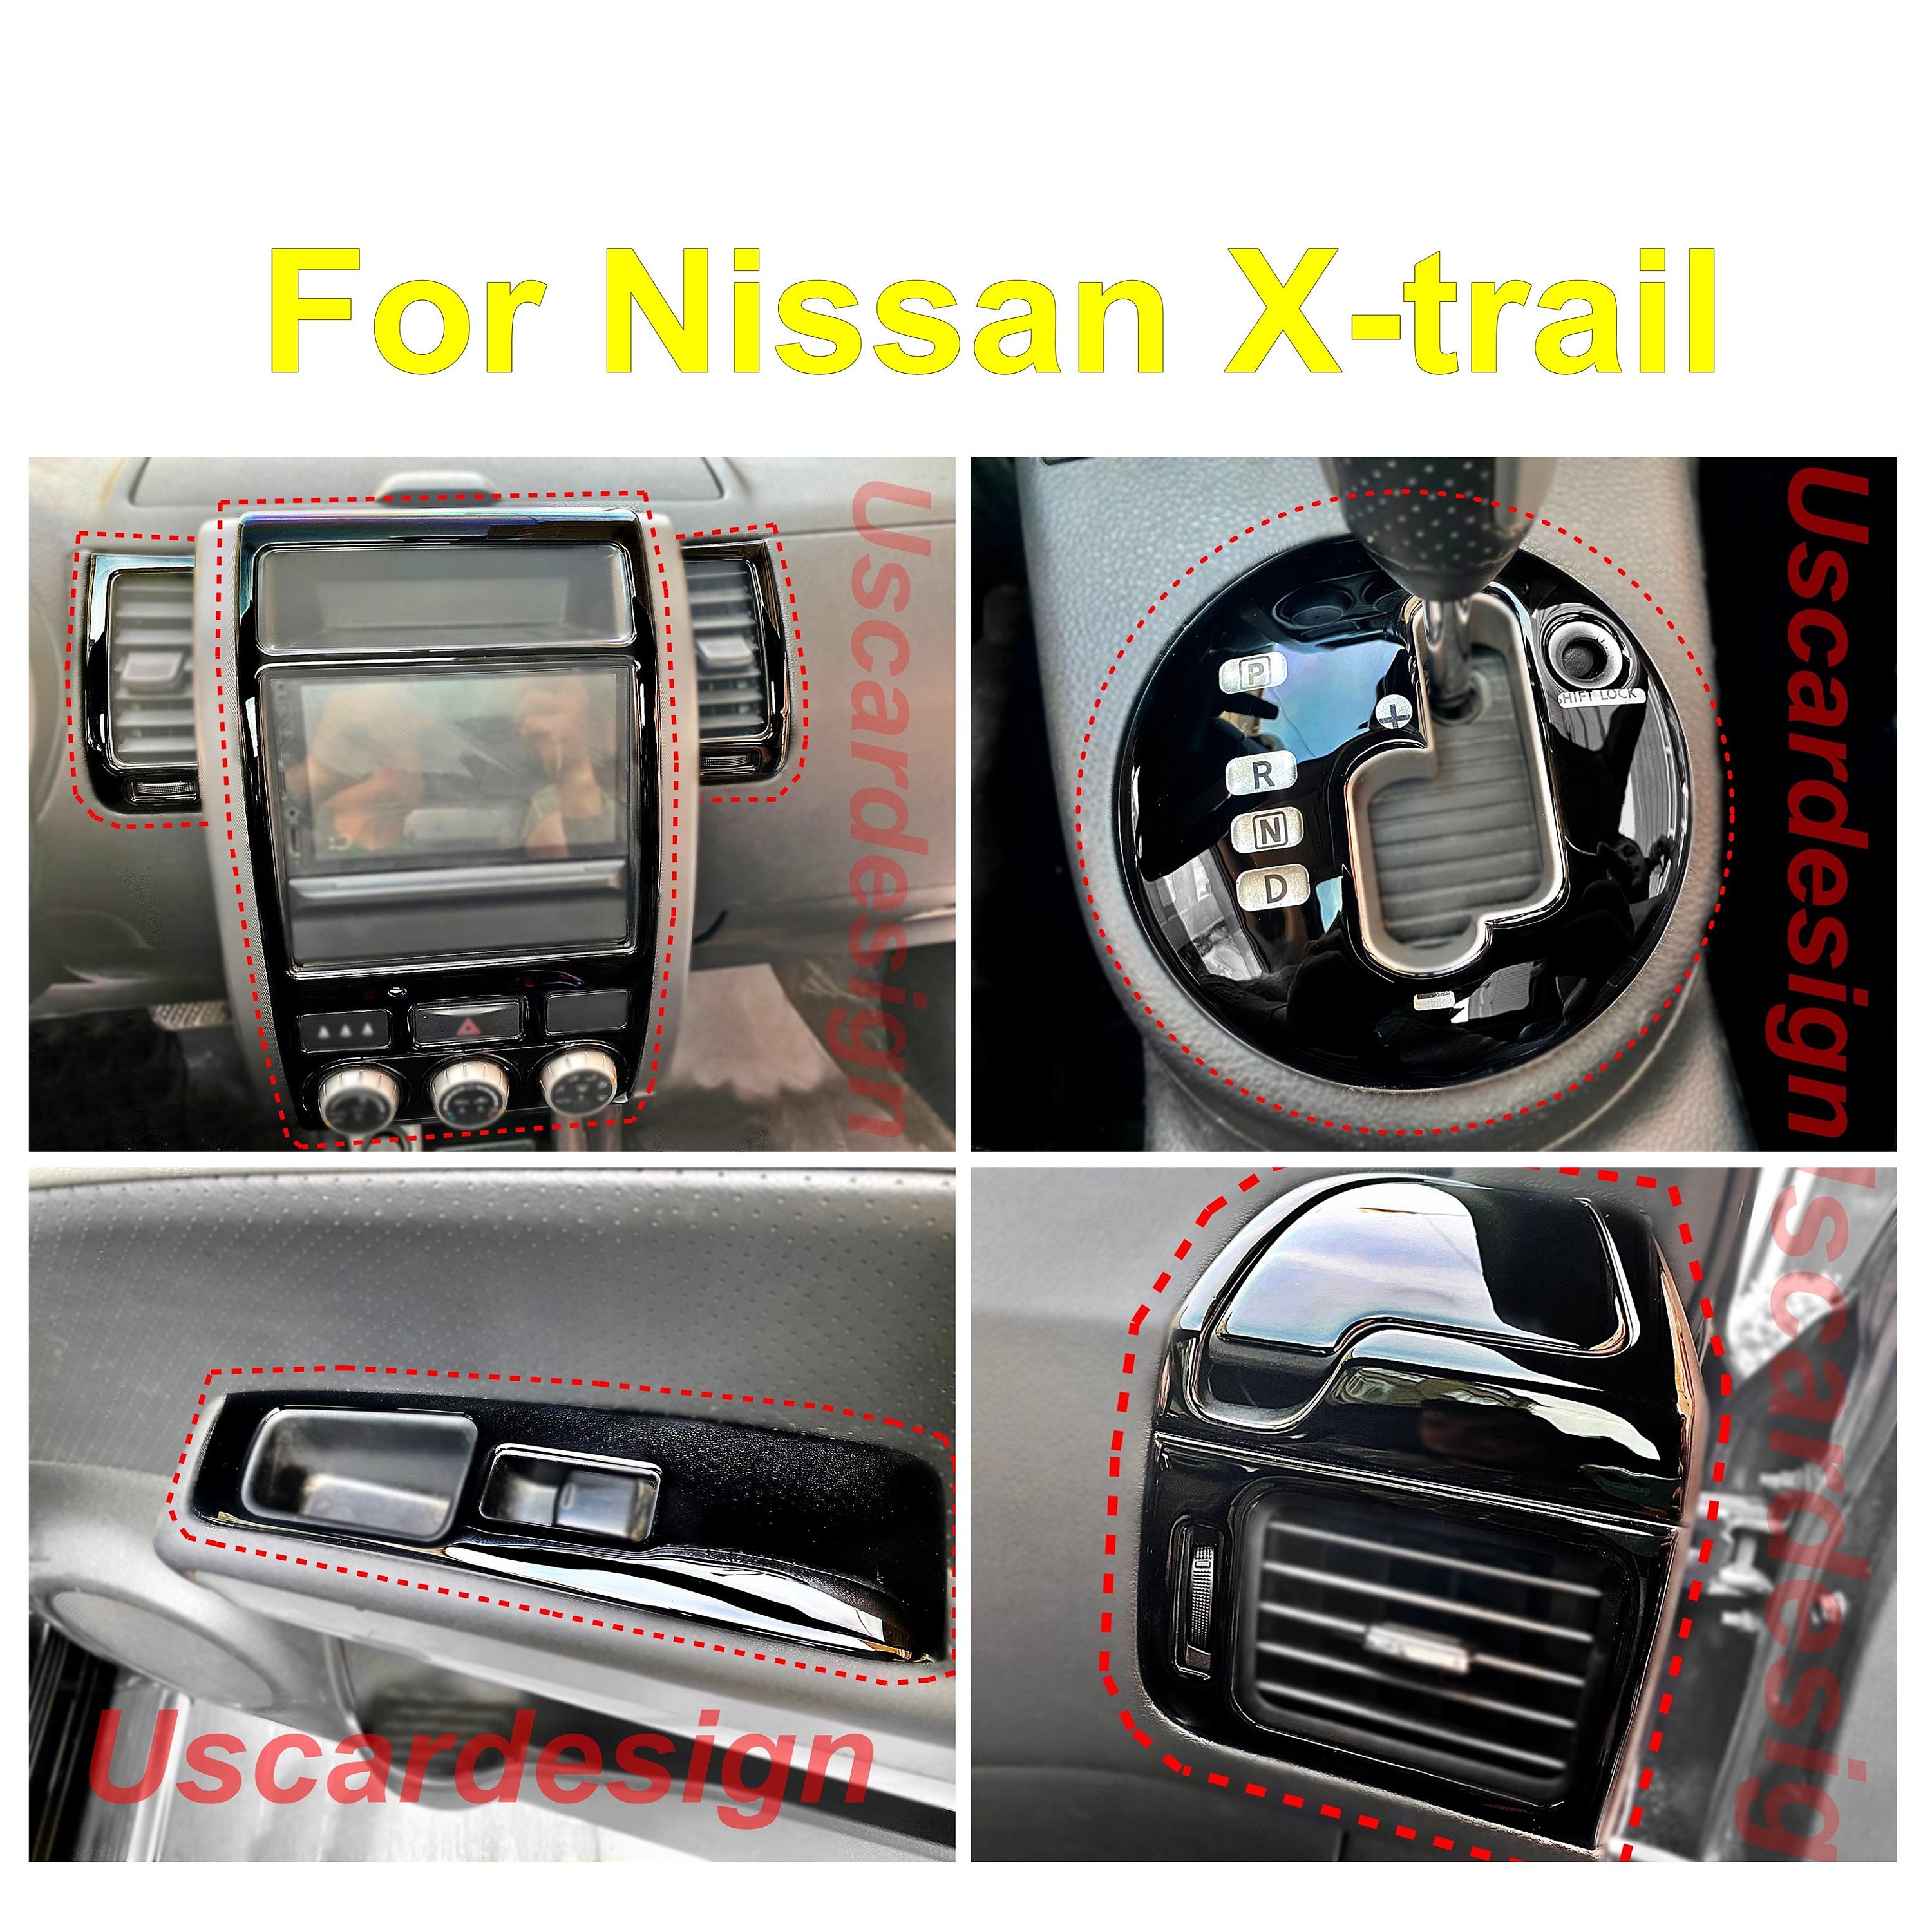 Nissan X-Trail Mk3 common problems (2014-2021)